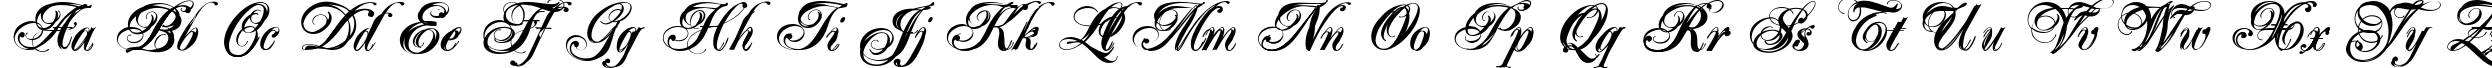 Пример написания английского алфавита шрифтом Majestic X